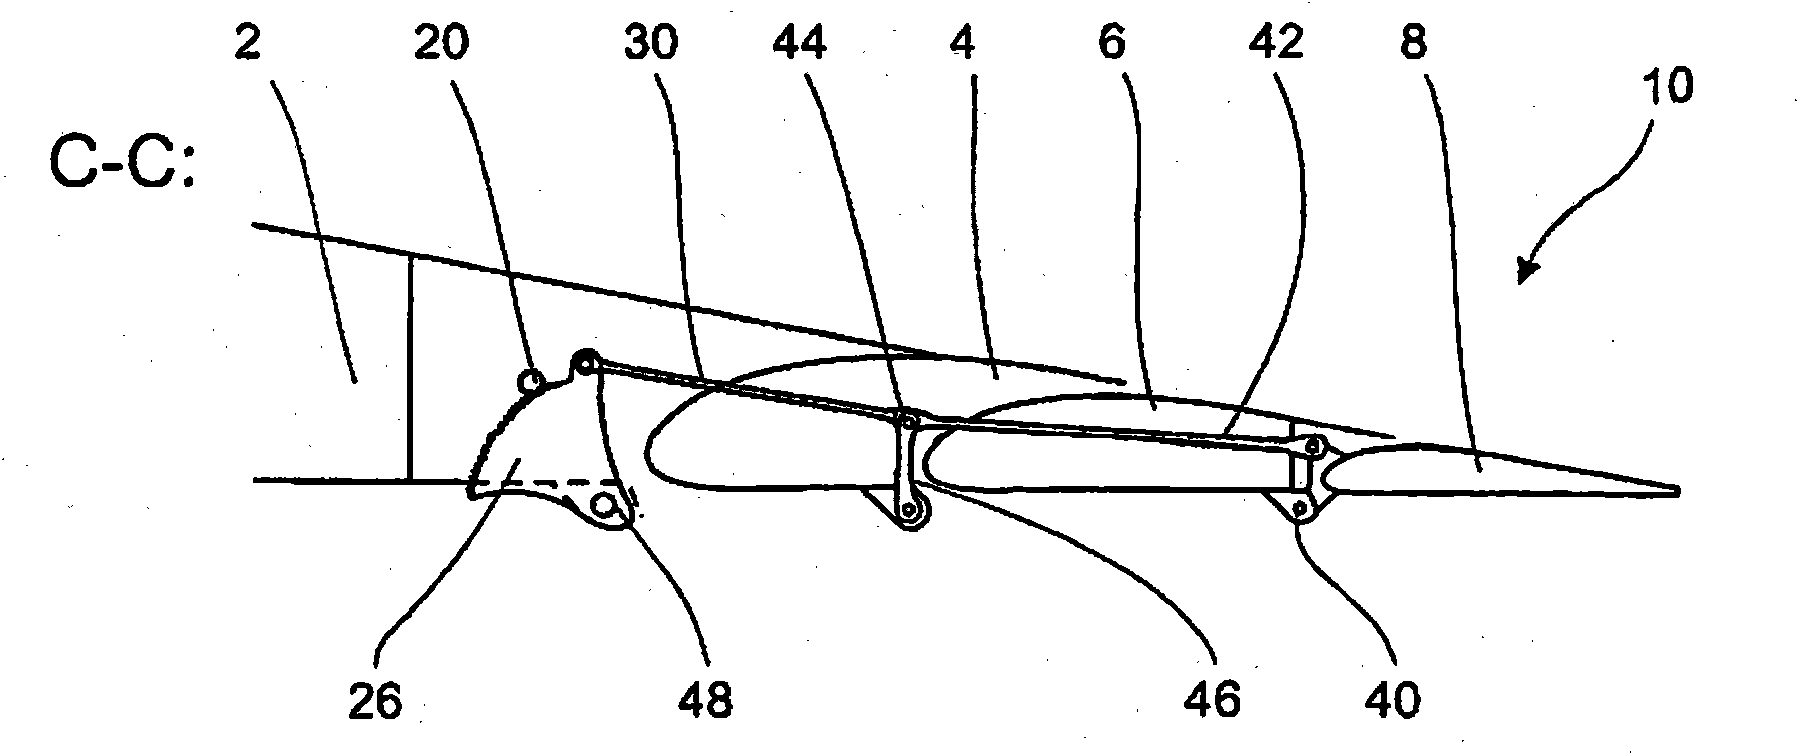 Landing flap mechanism driven by pinion gears